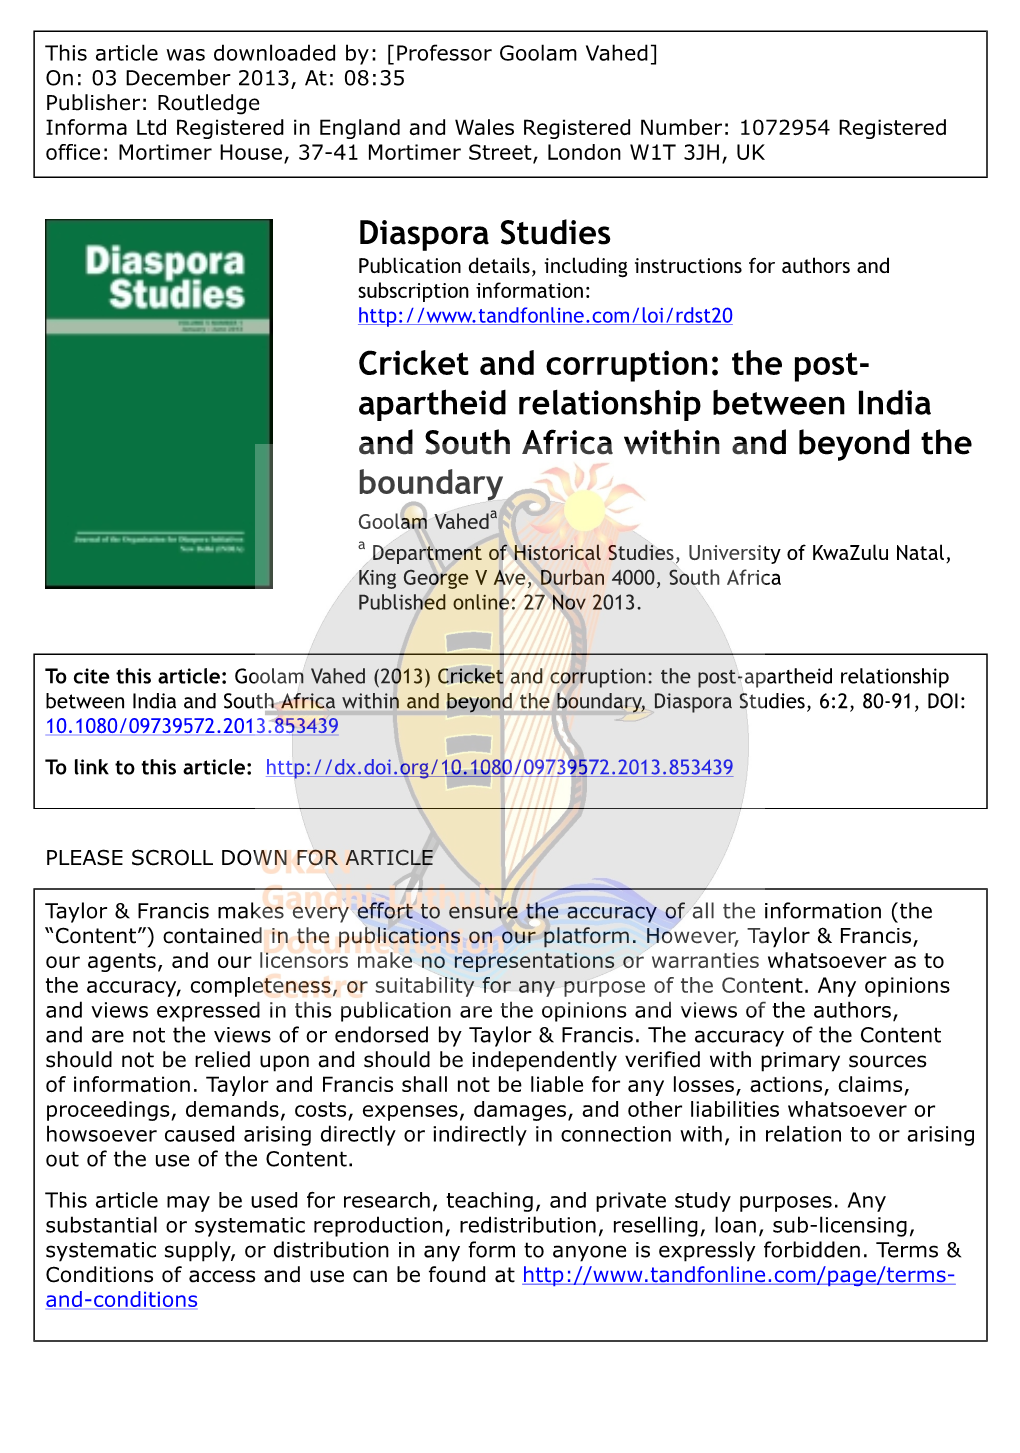 Diaspora Studies Cricket and Corruption: the Post- Apartheid